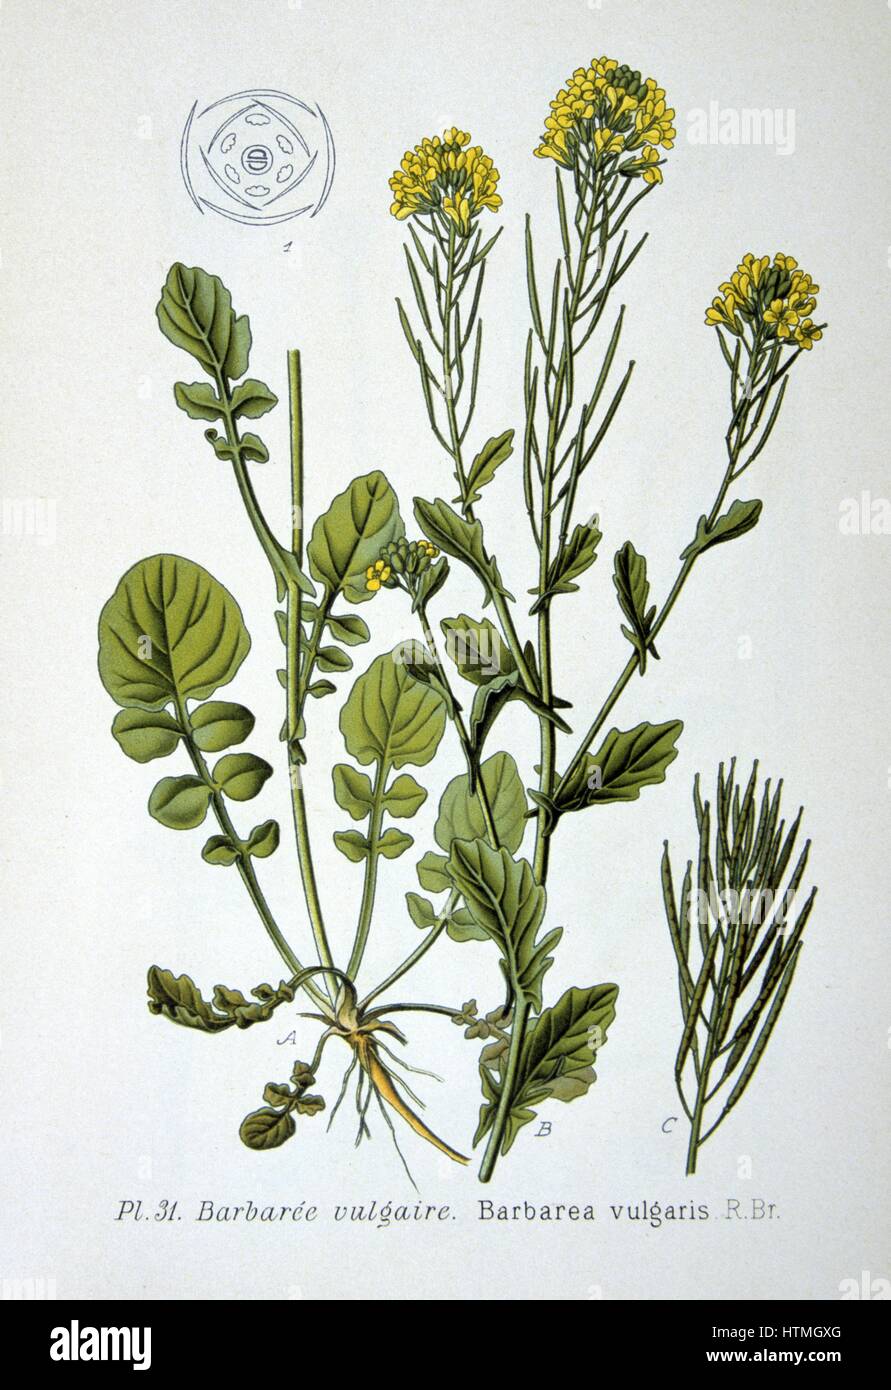 Common Bittercress or Yellow Rocket (Barbarea vulgaris), biennial wild herb of Brassica family native of Europe. From Amedee Masclef "Atlas des Plantes de France", Paris, 1893. Stock Photo